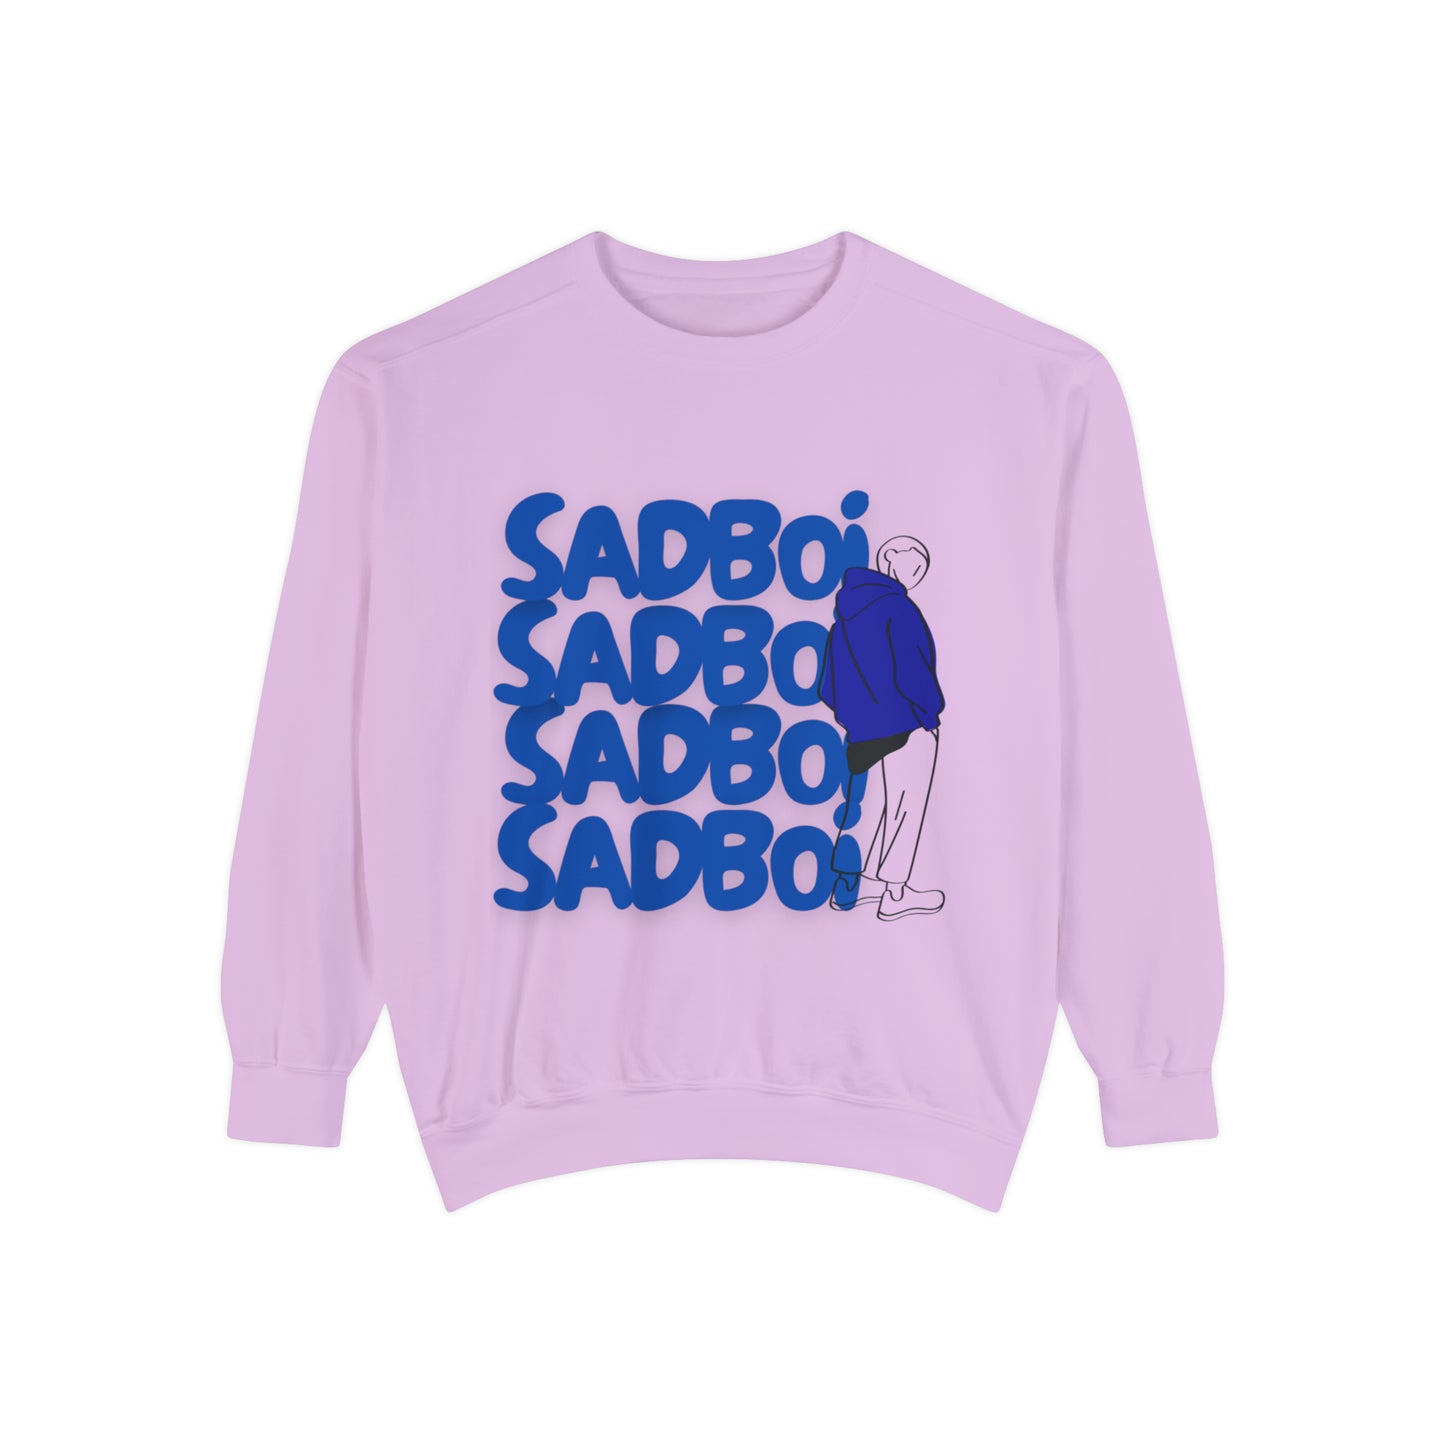 Sadboi